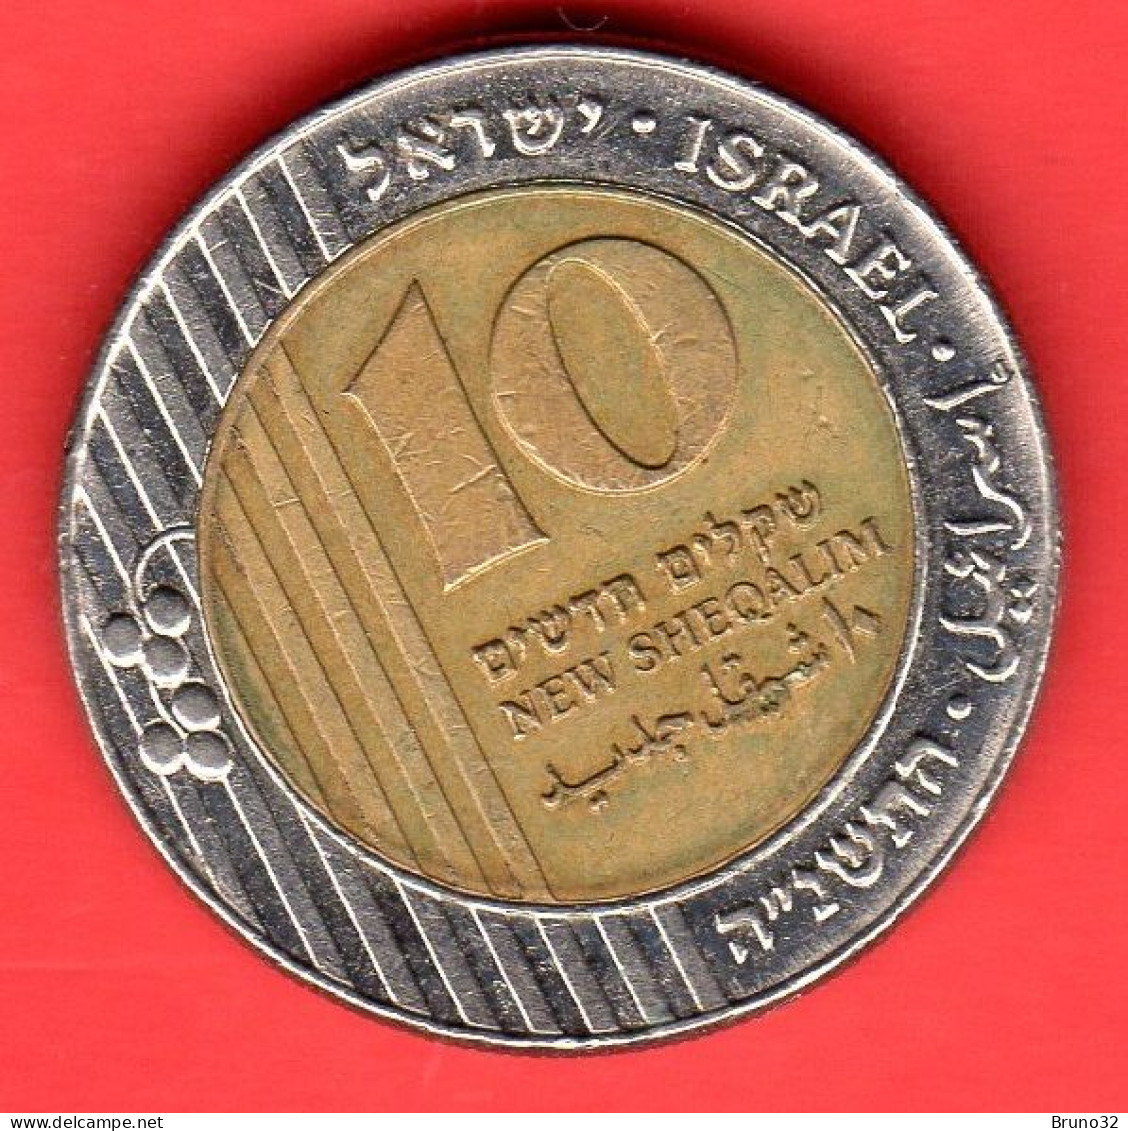 ISRAELE - ISRAEL - 10 New Sheqalim - QFDC/aUNC - Come Da Foto - Israel